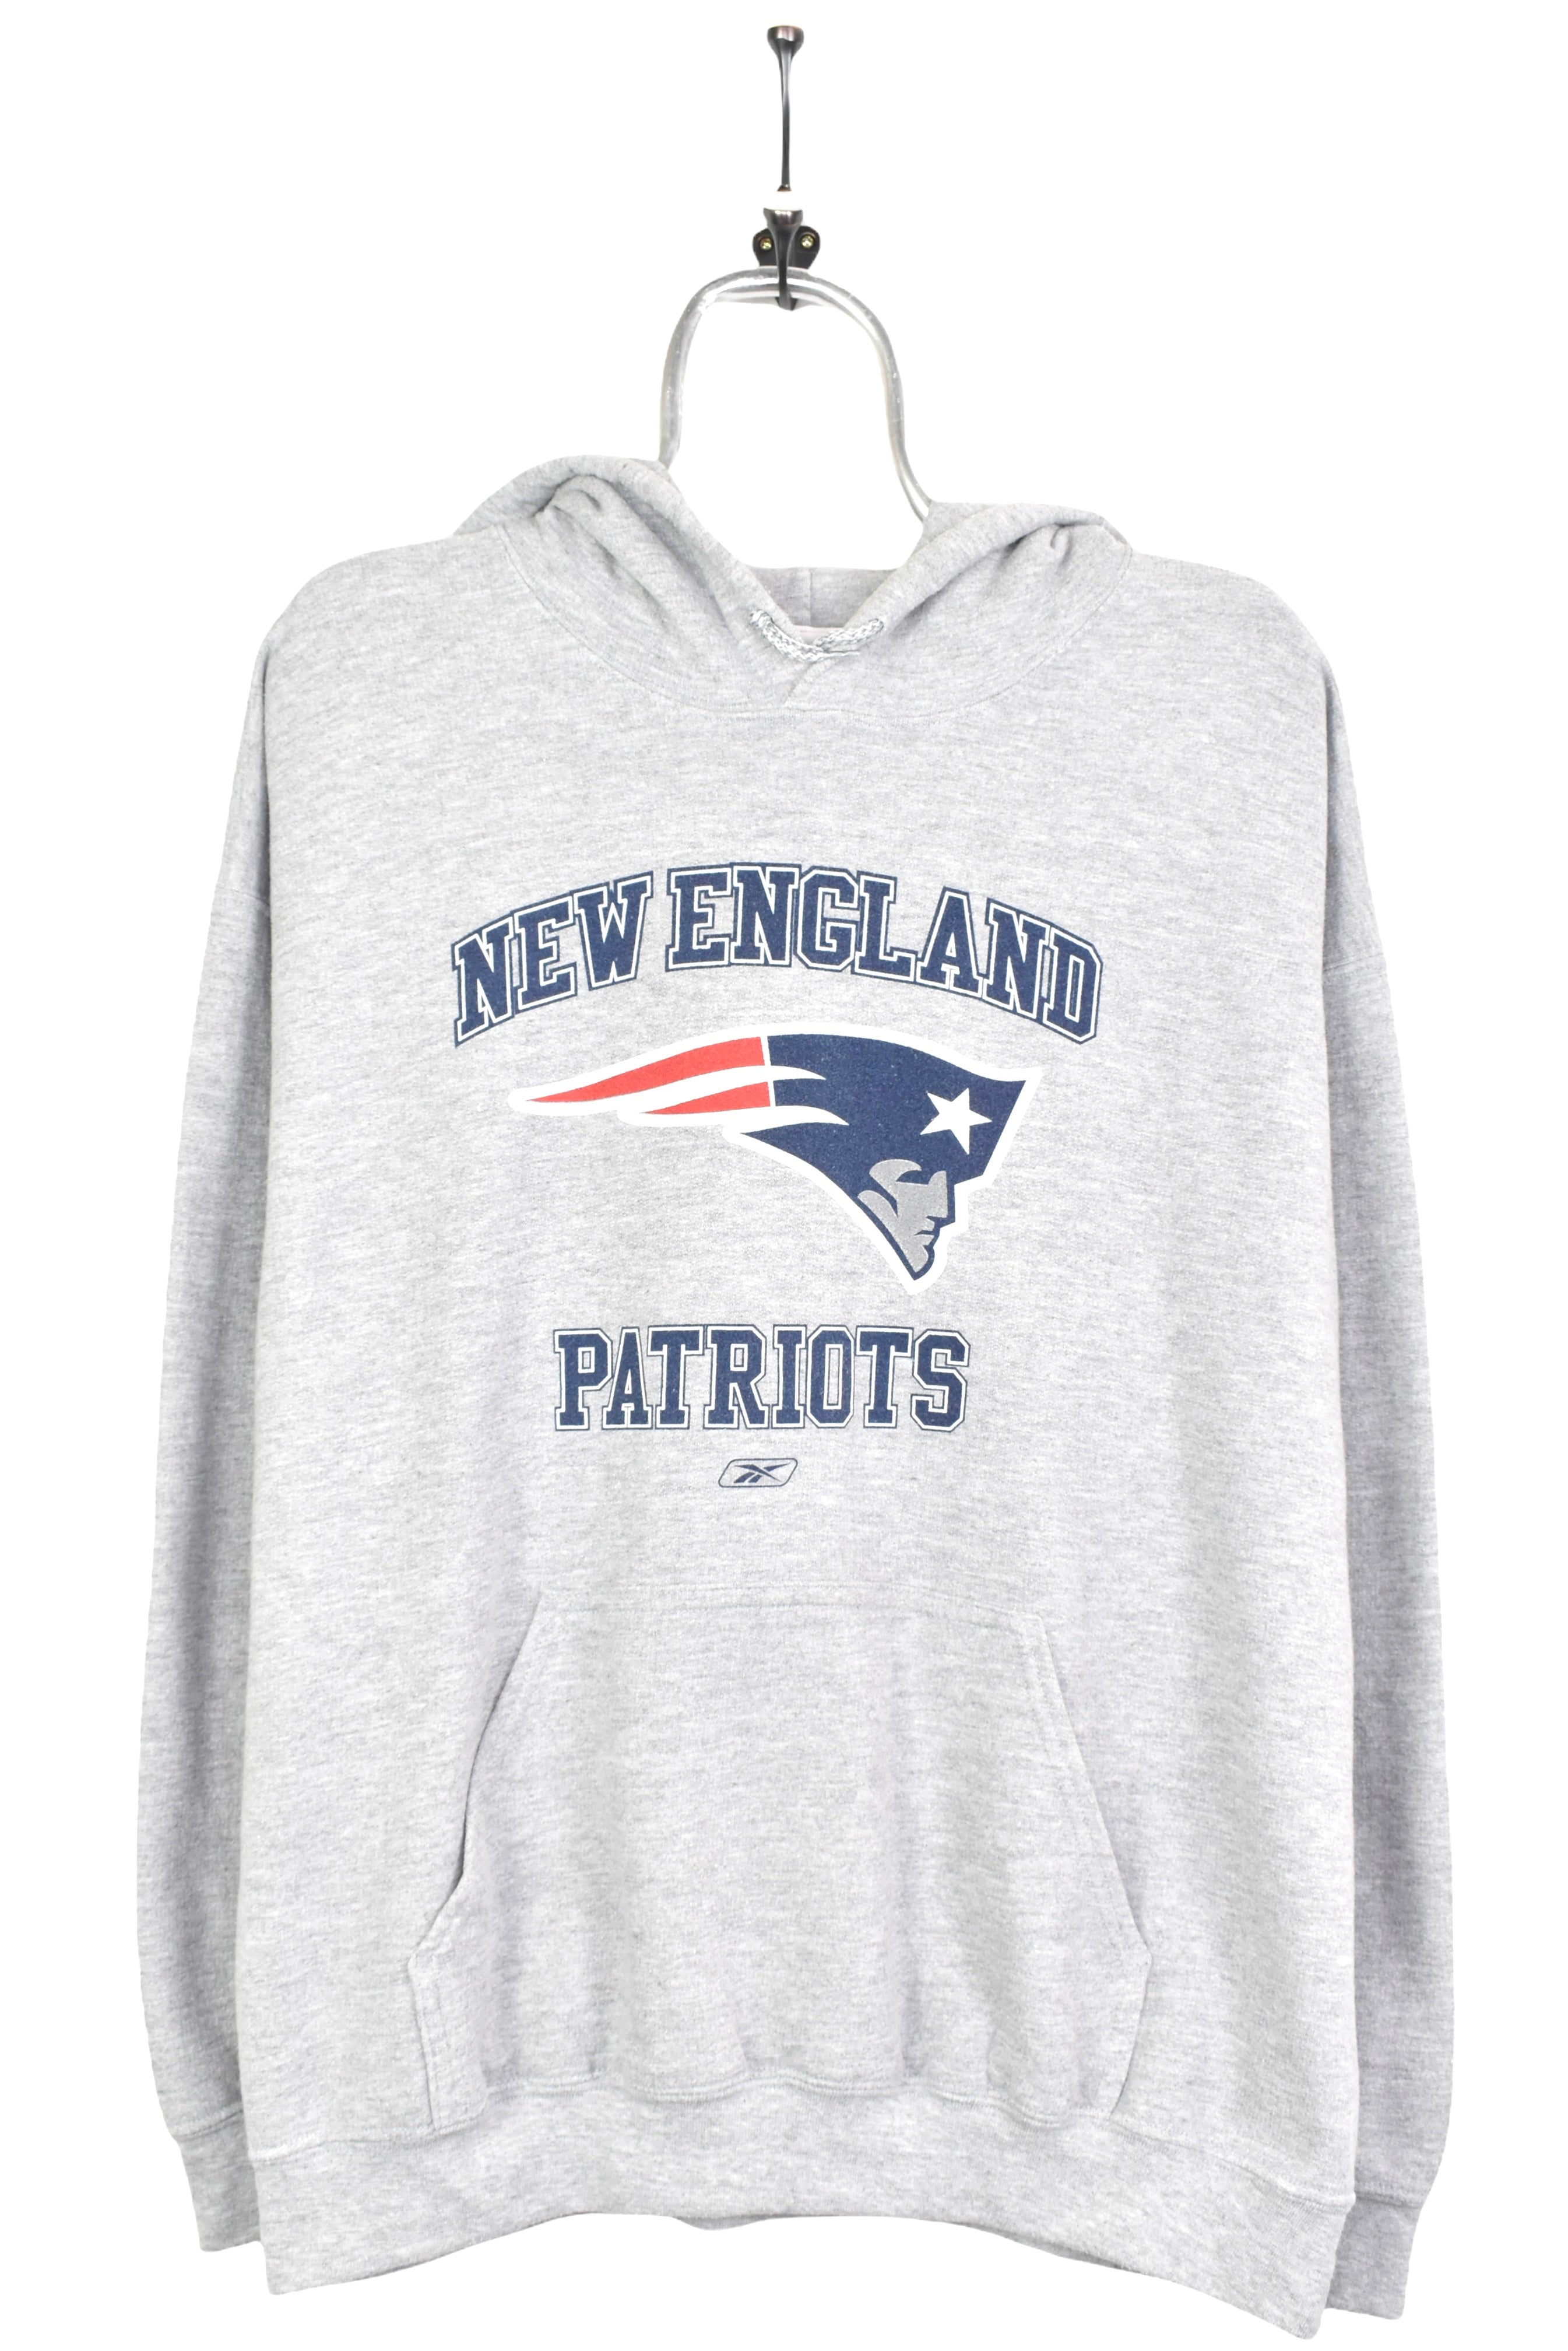 Vintage New England Patriots hoodie, NFL graphic sweatshirt - large, grey PRO SPORT